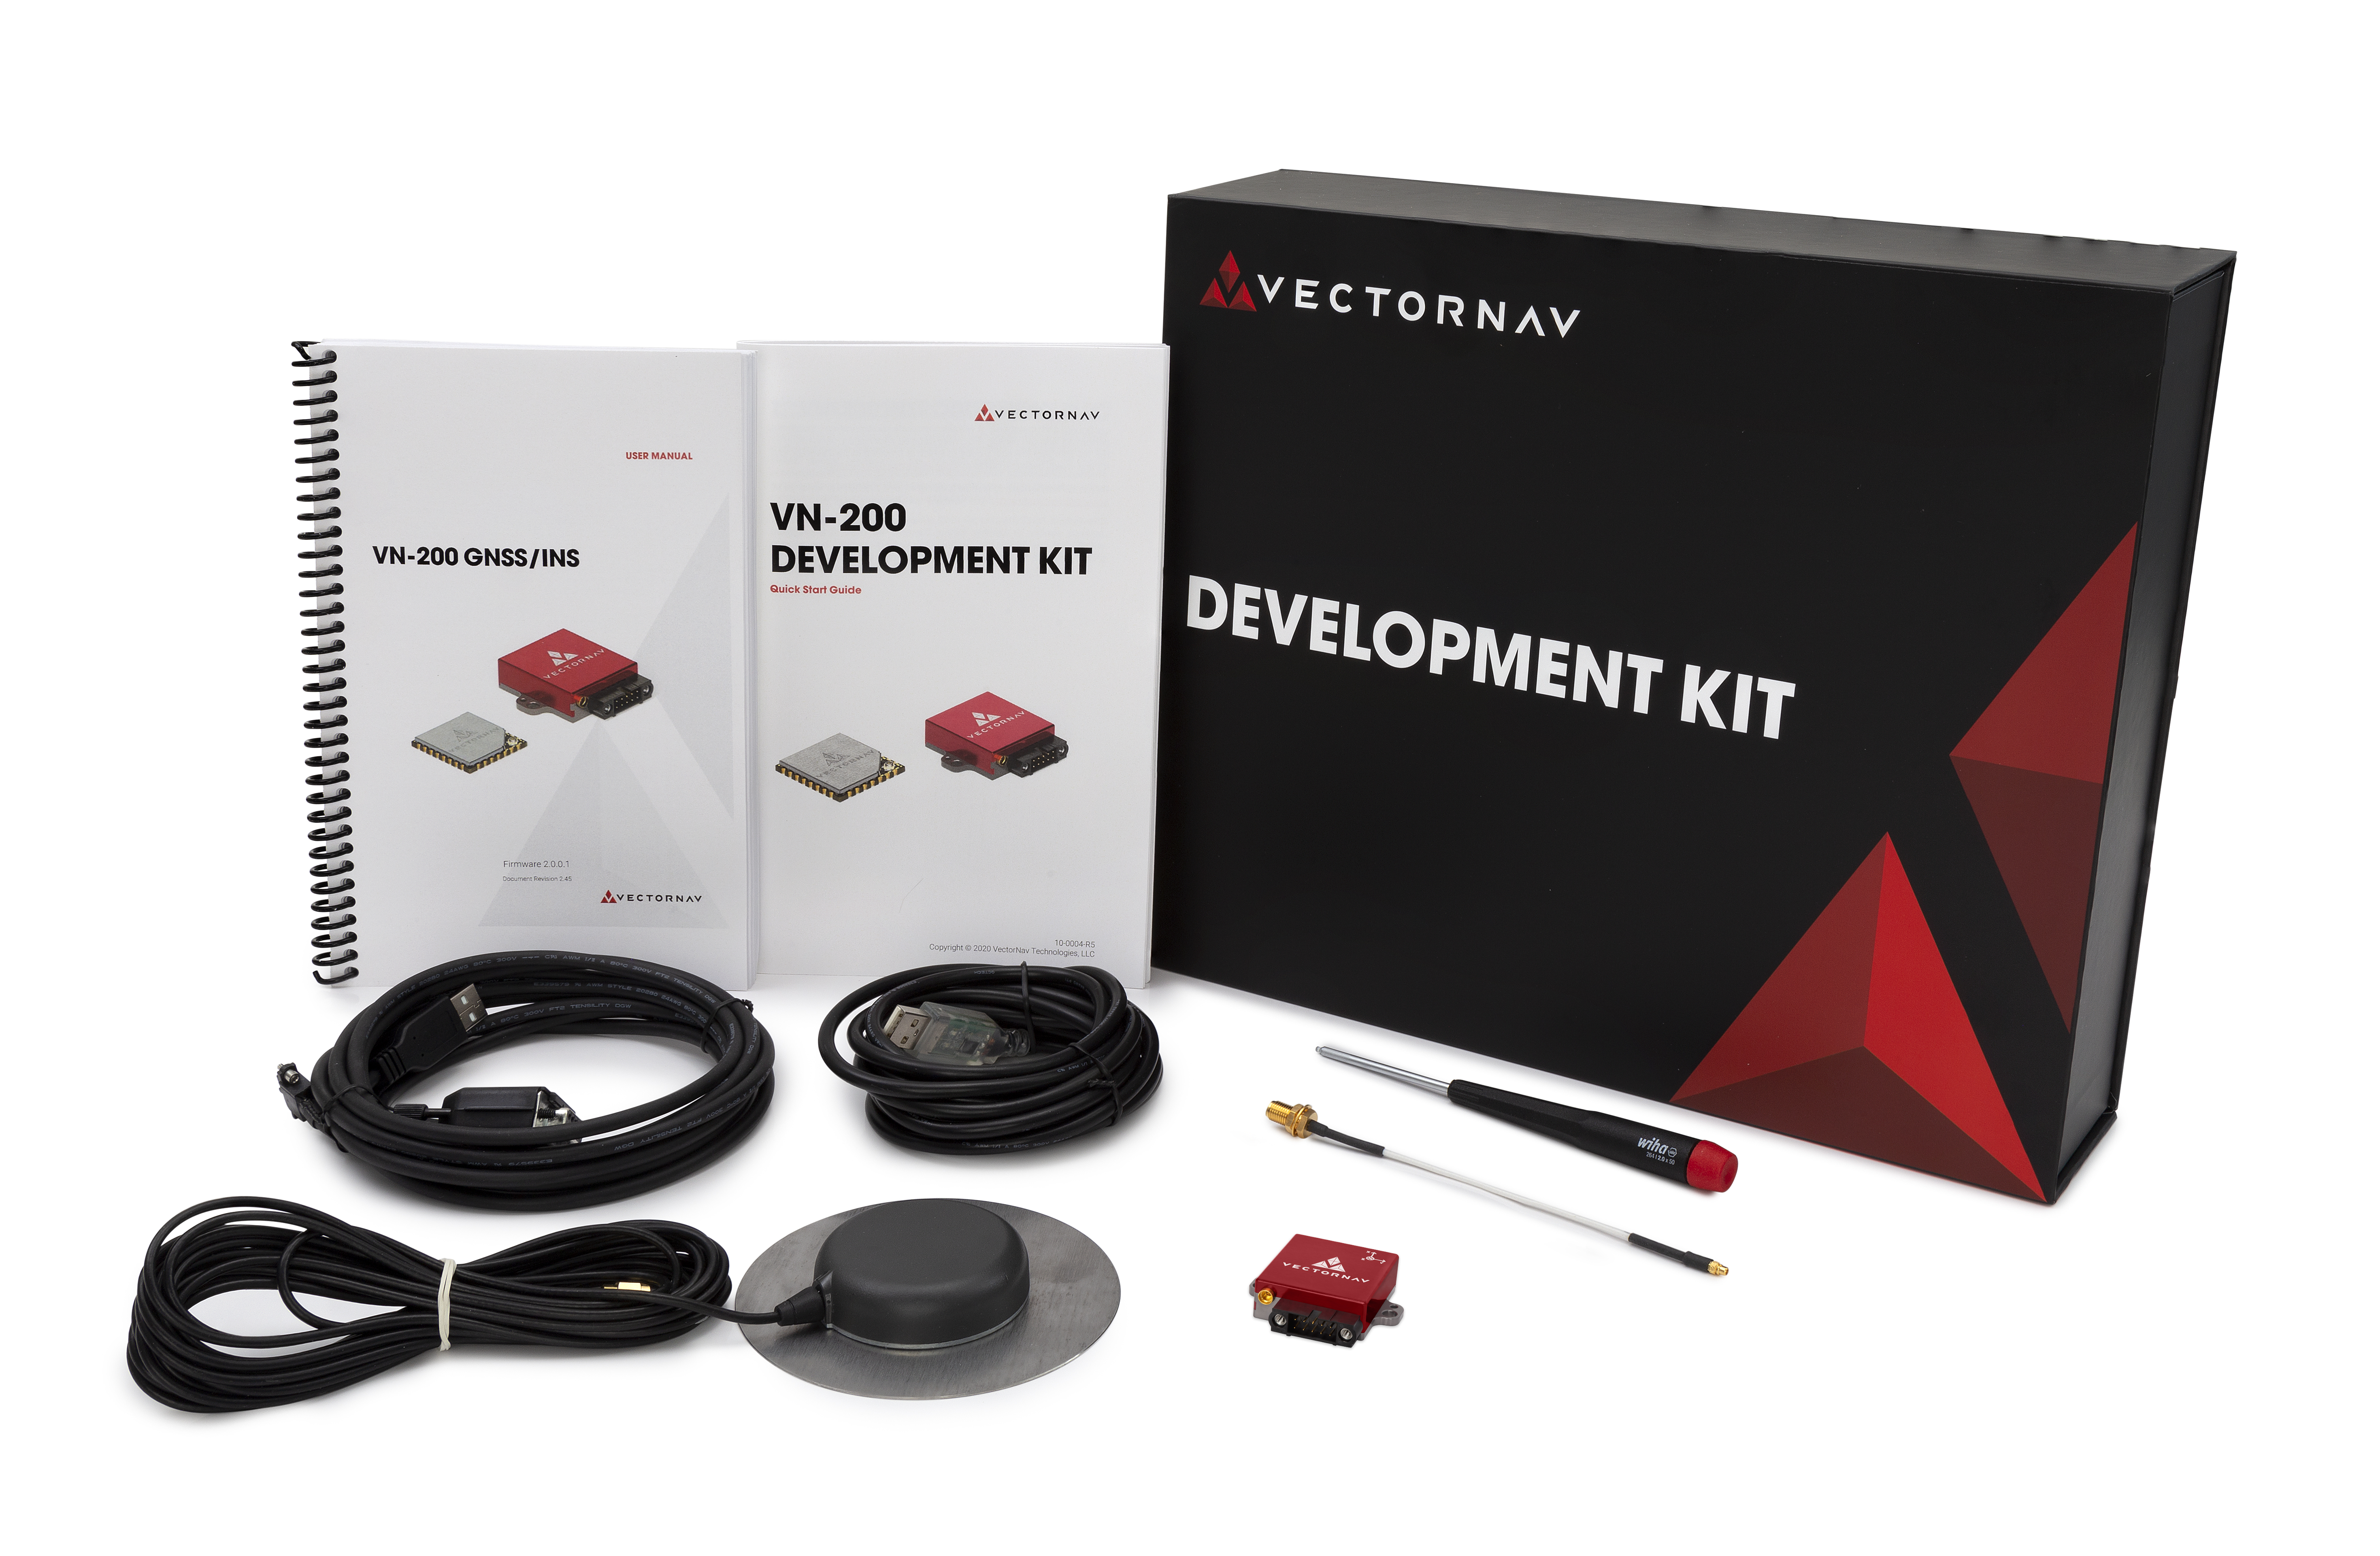 VN-200 Rugged Development Kit